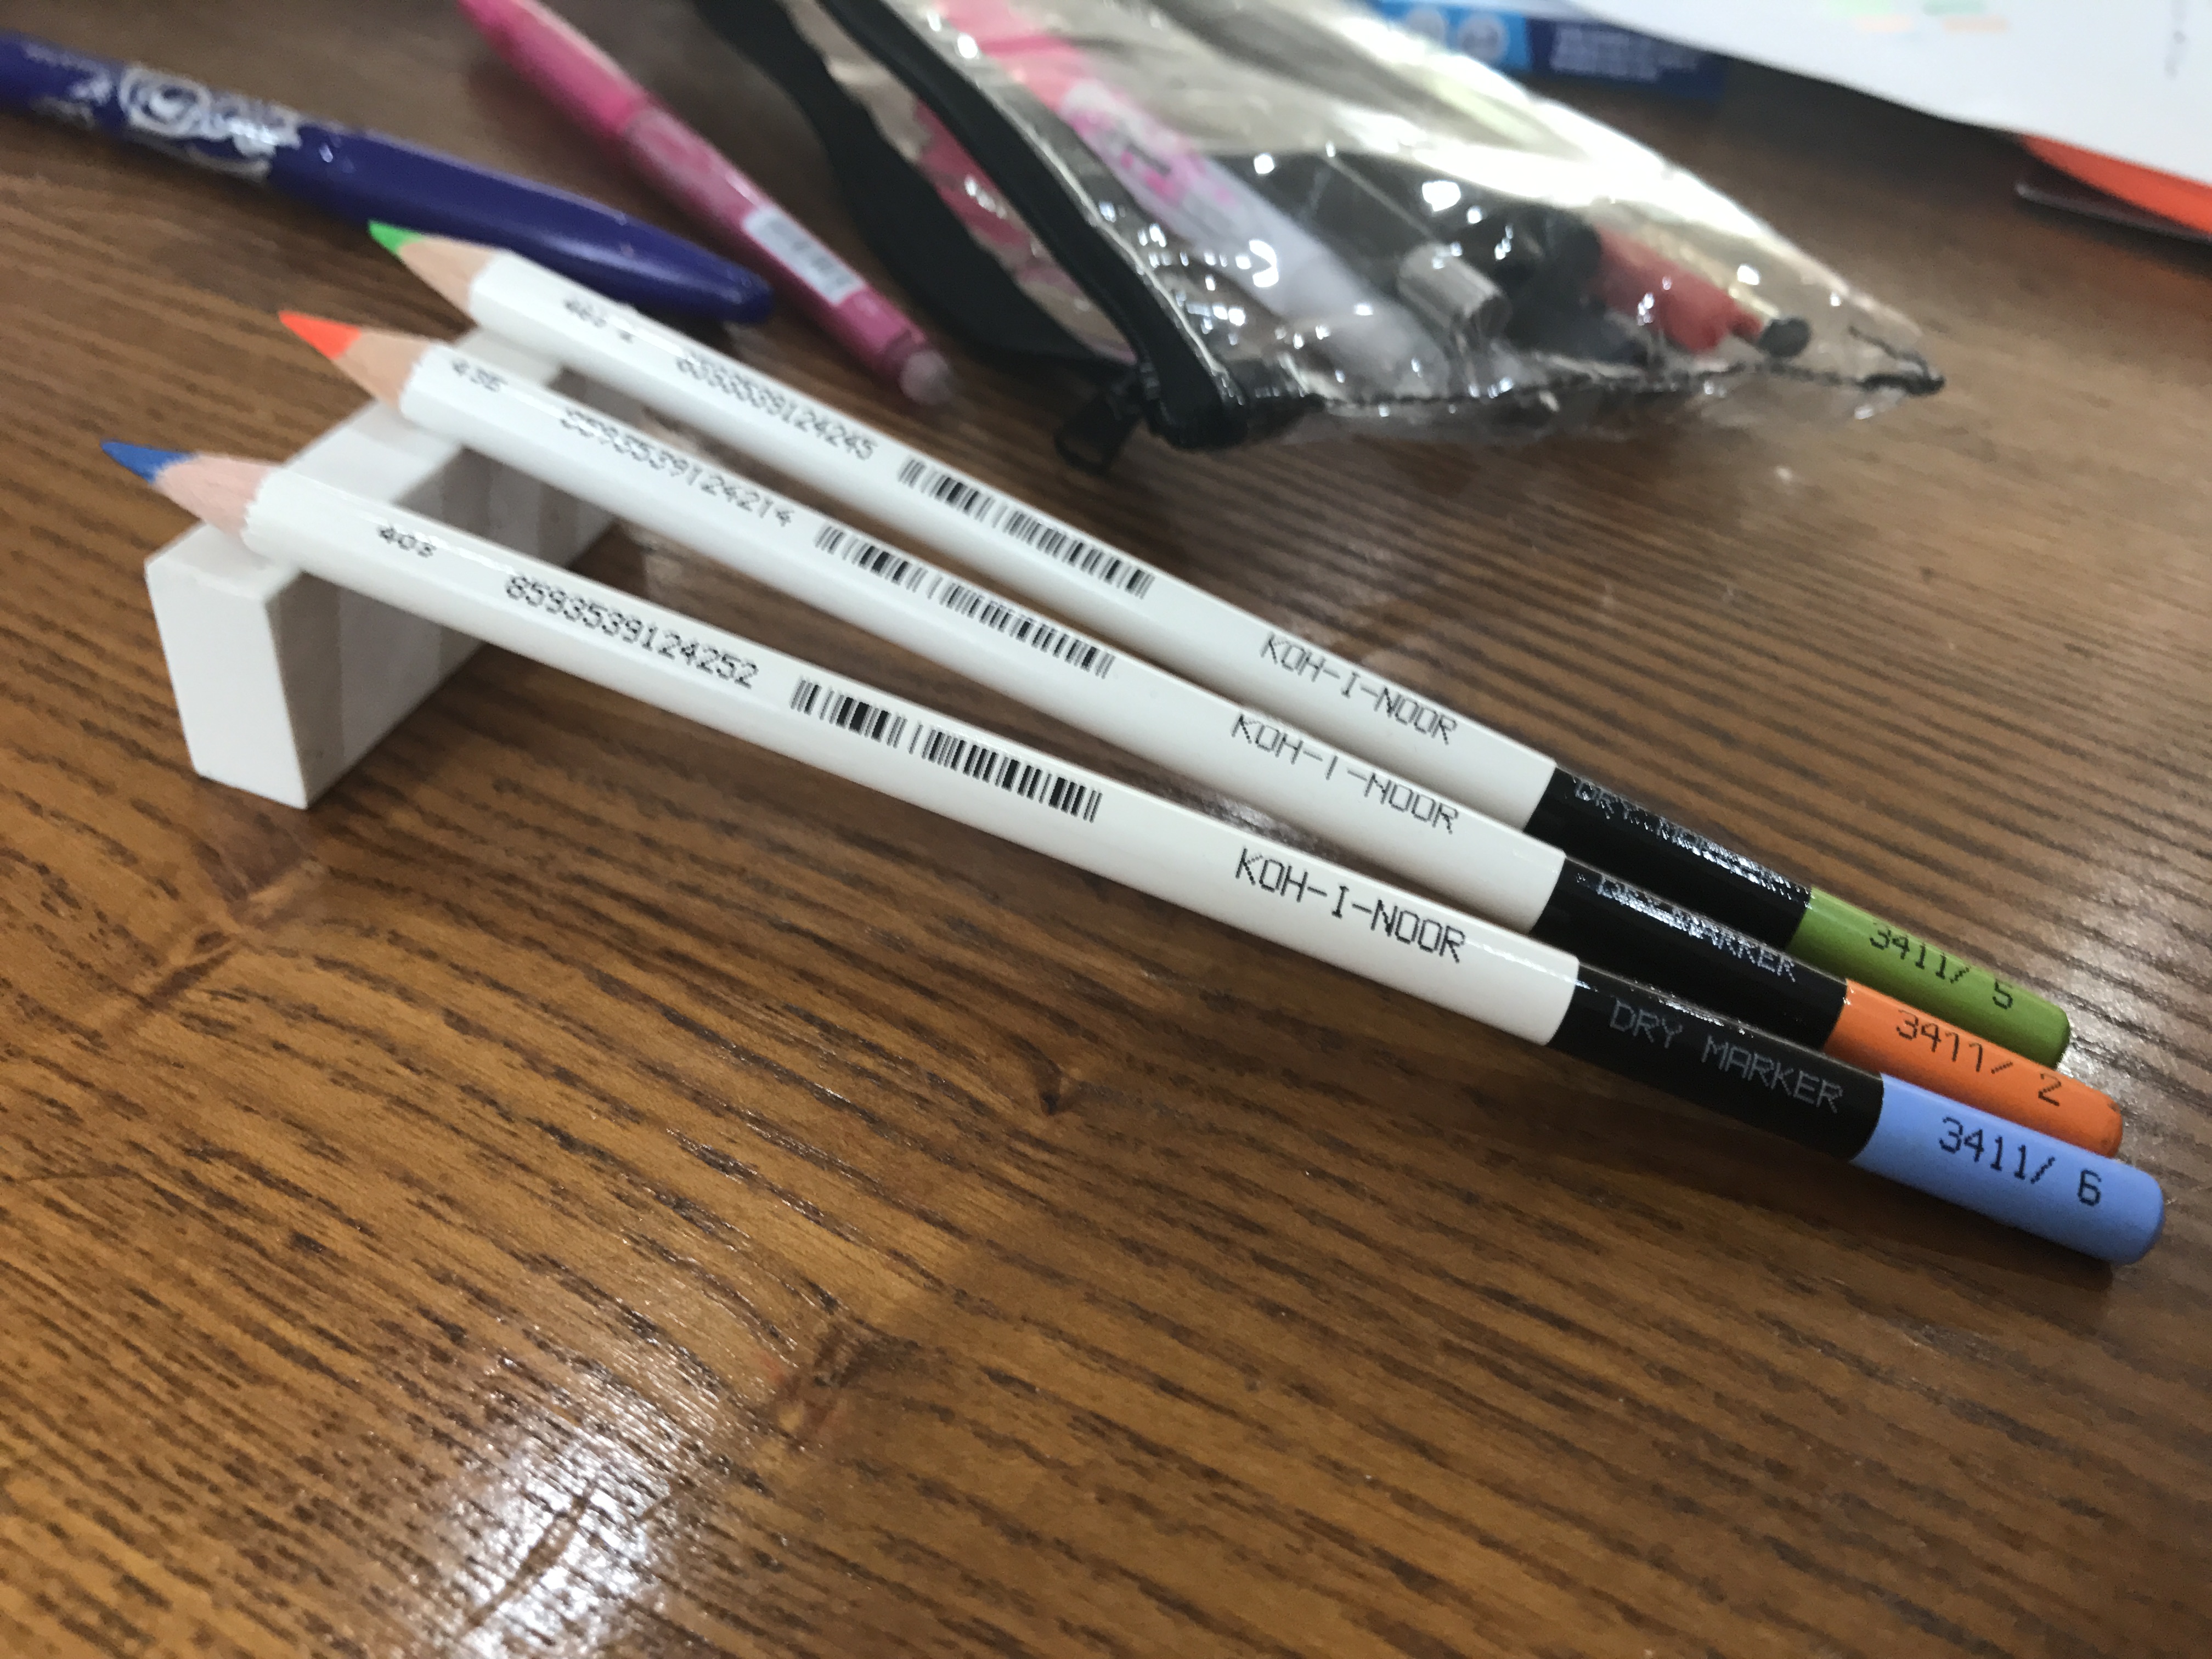 Dry Highlighter NEON Set Marker Colored Pencil KOH-I-NOOR 3411 3415 Crayon 